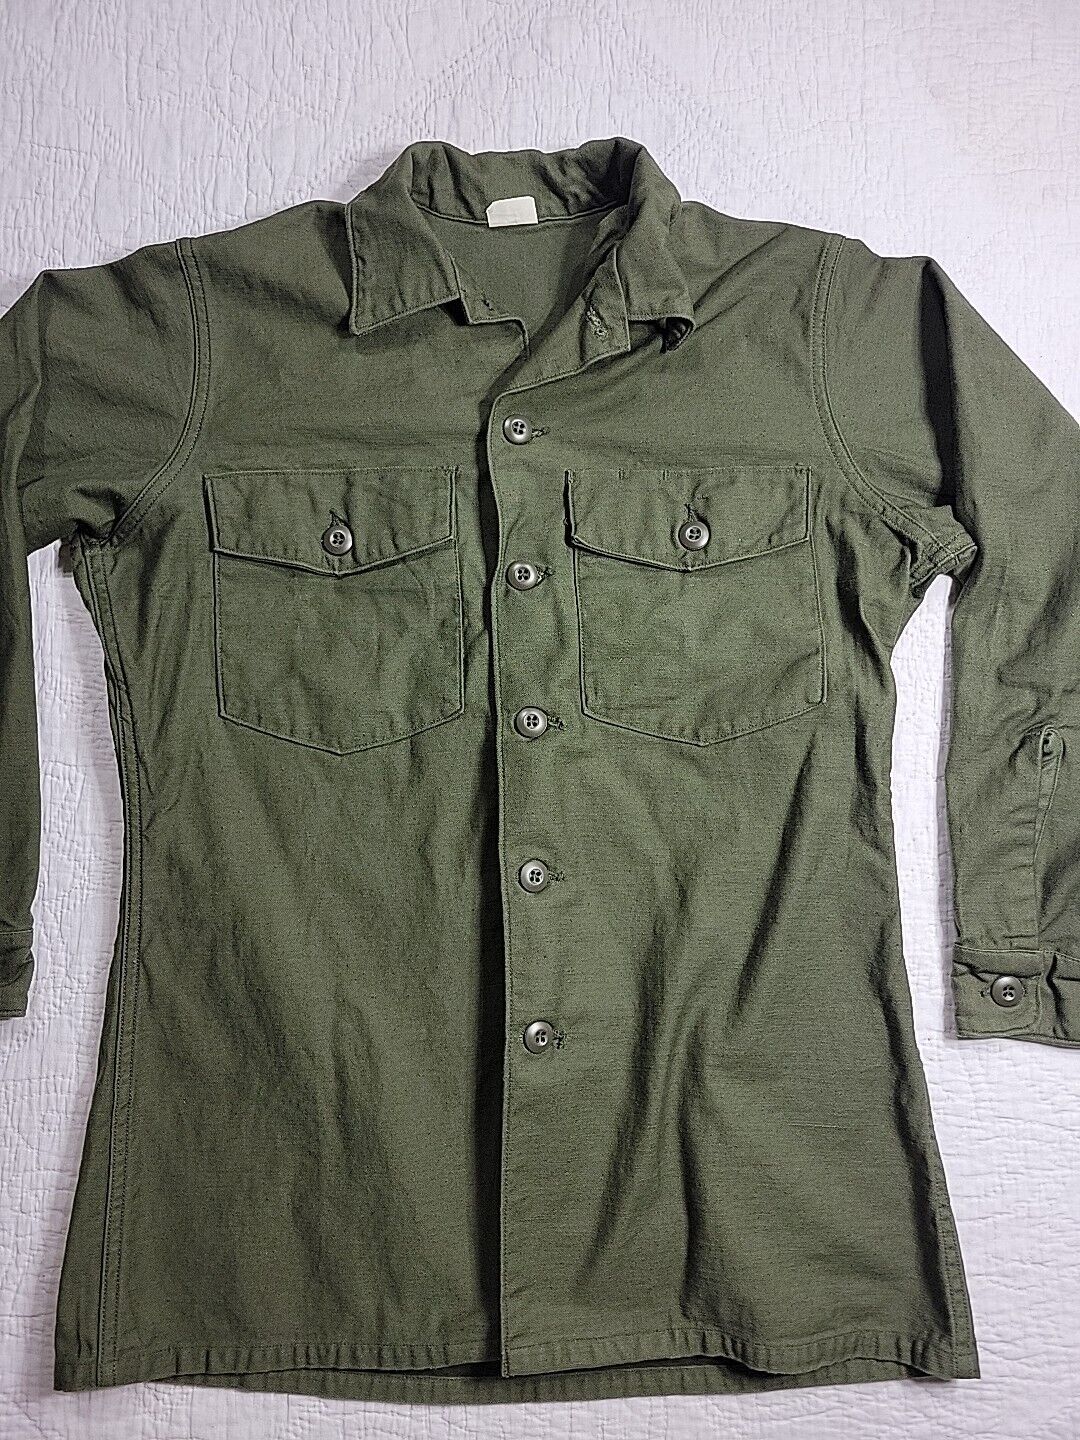 Vintage US Army Vietnam Era OG-107 Sateen Fatigue Duty Shirt Size Small 15.5x31